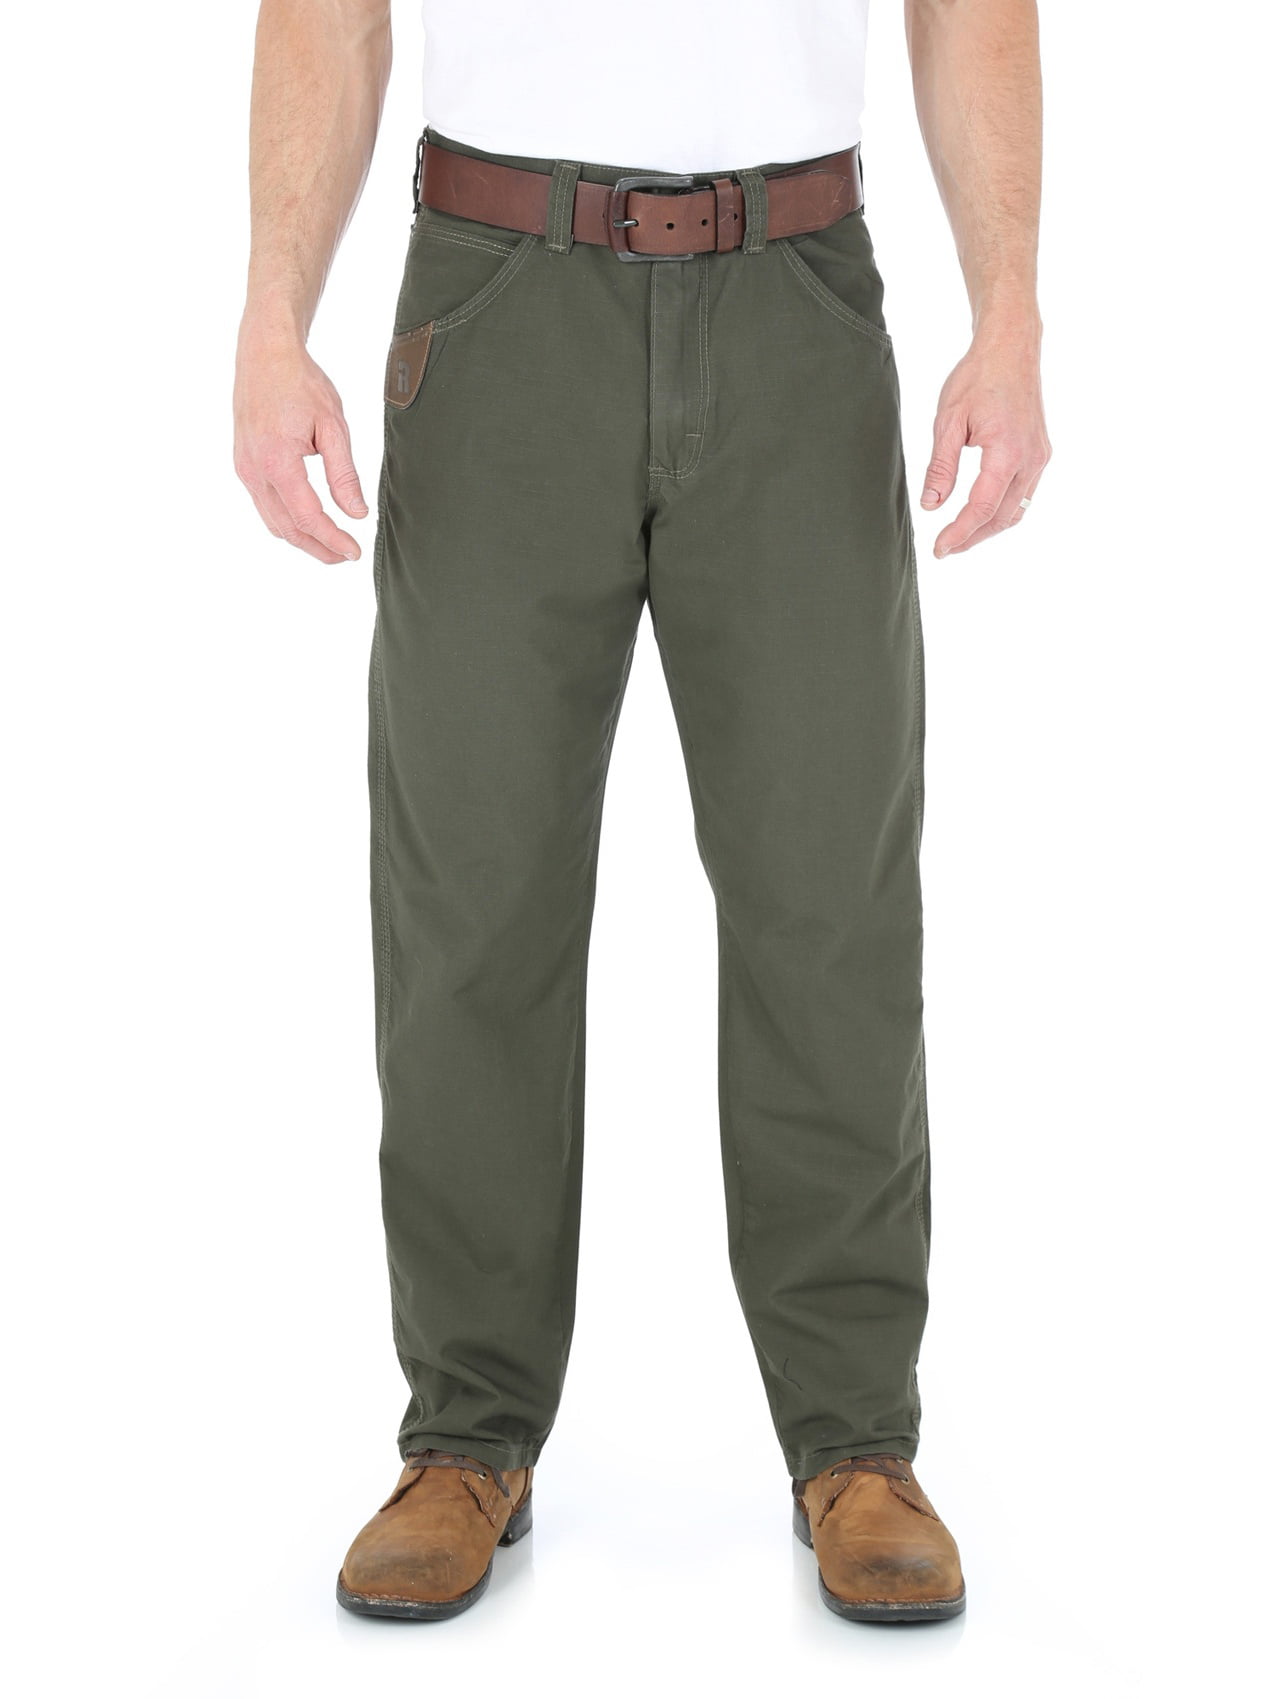 Wrangler Men's RIGGS Workwear Technician Pants - Loden, Loden, 34X36 -  